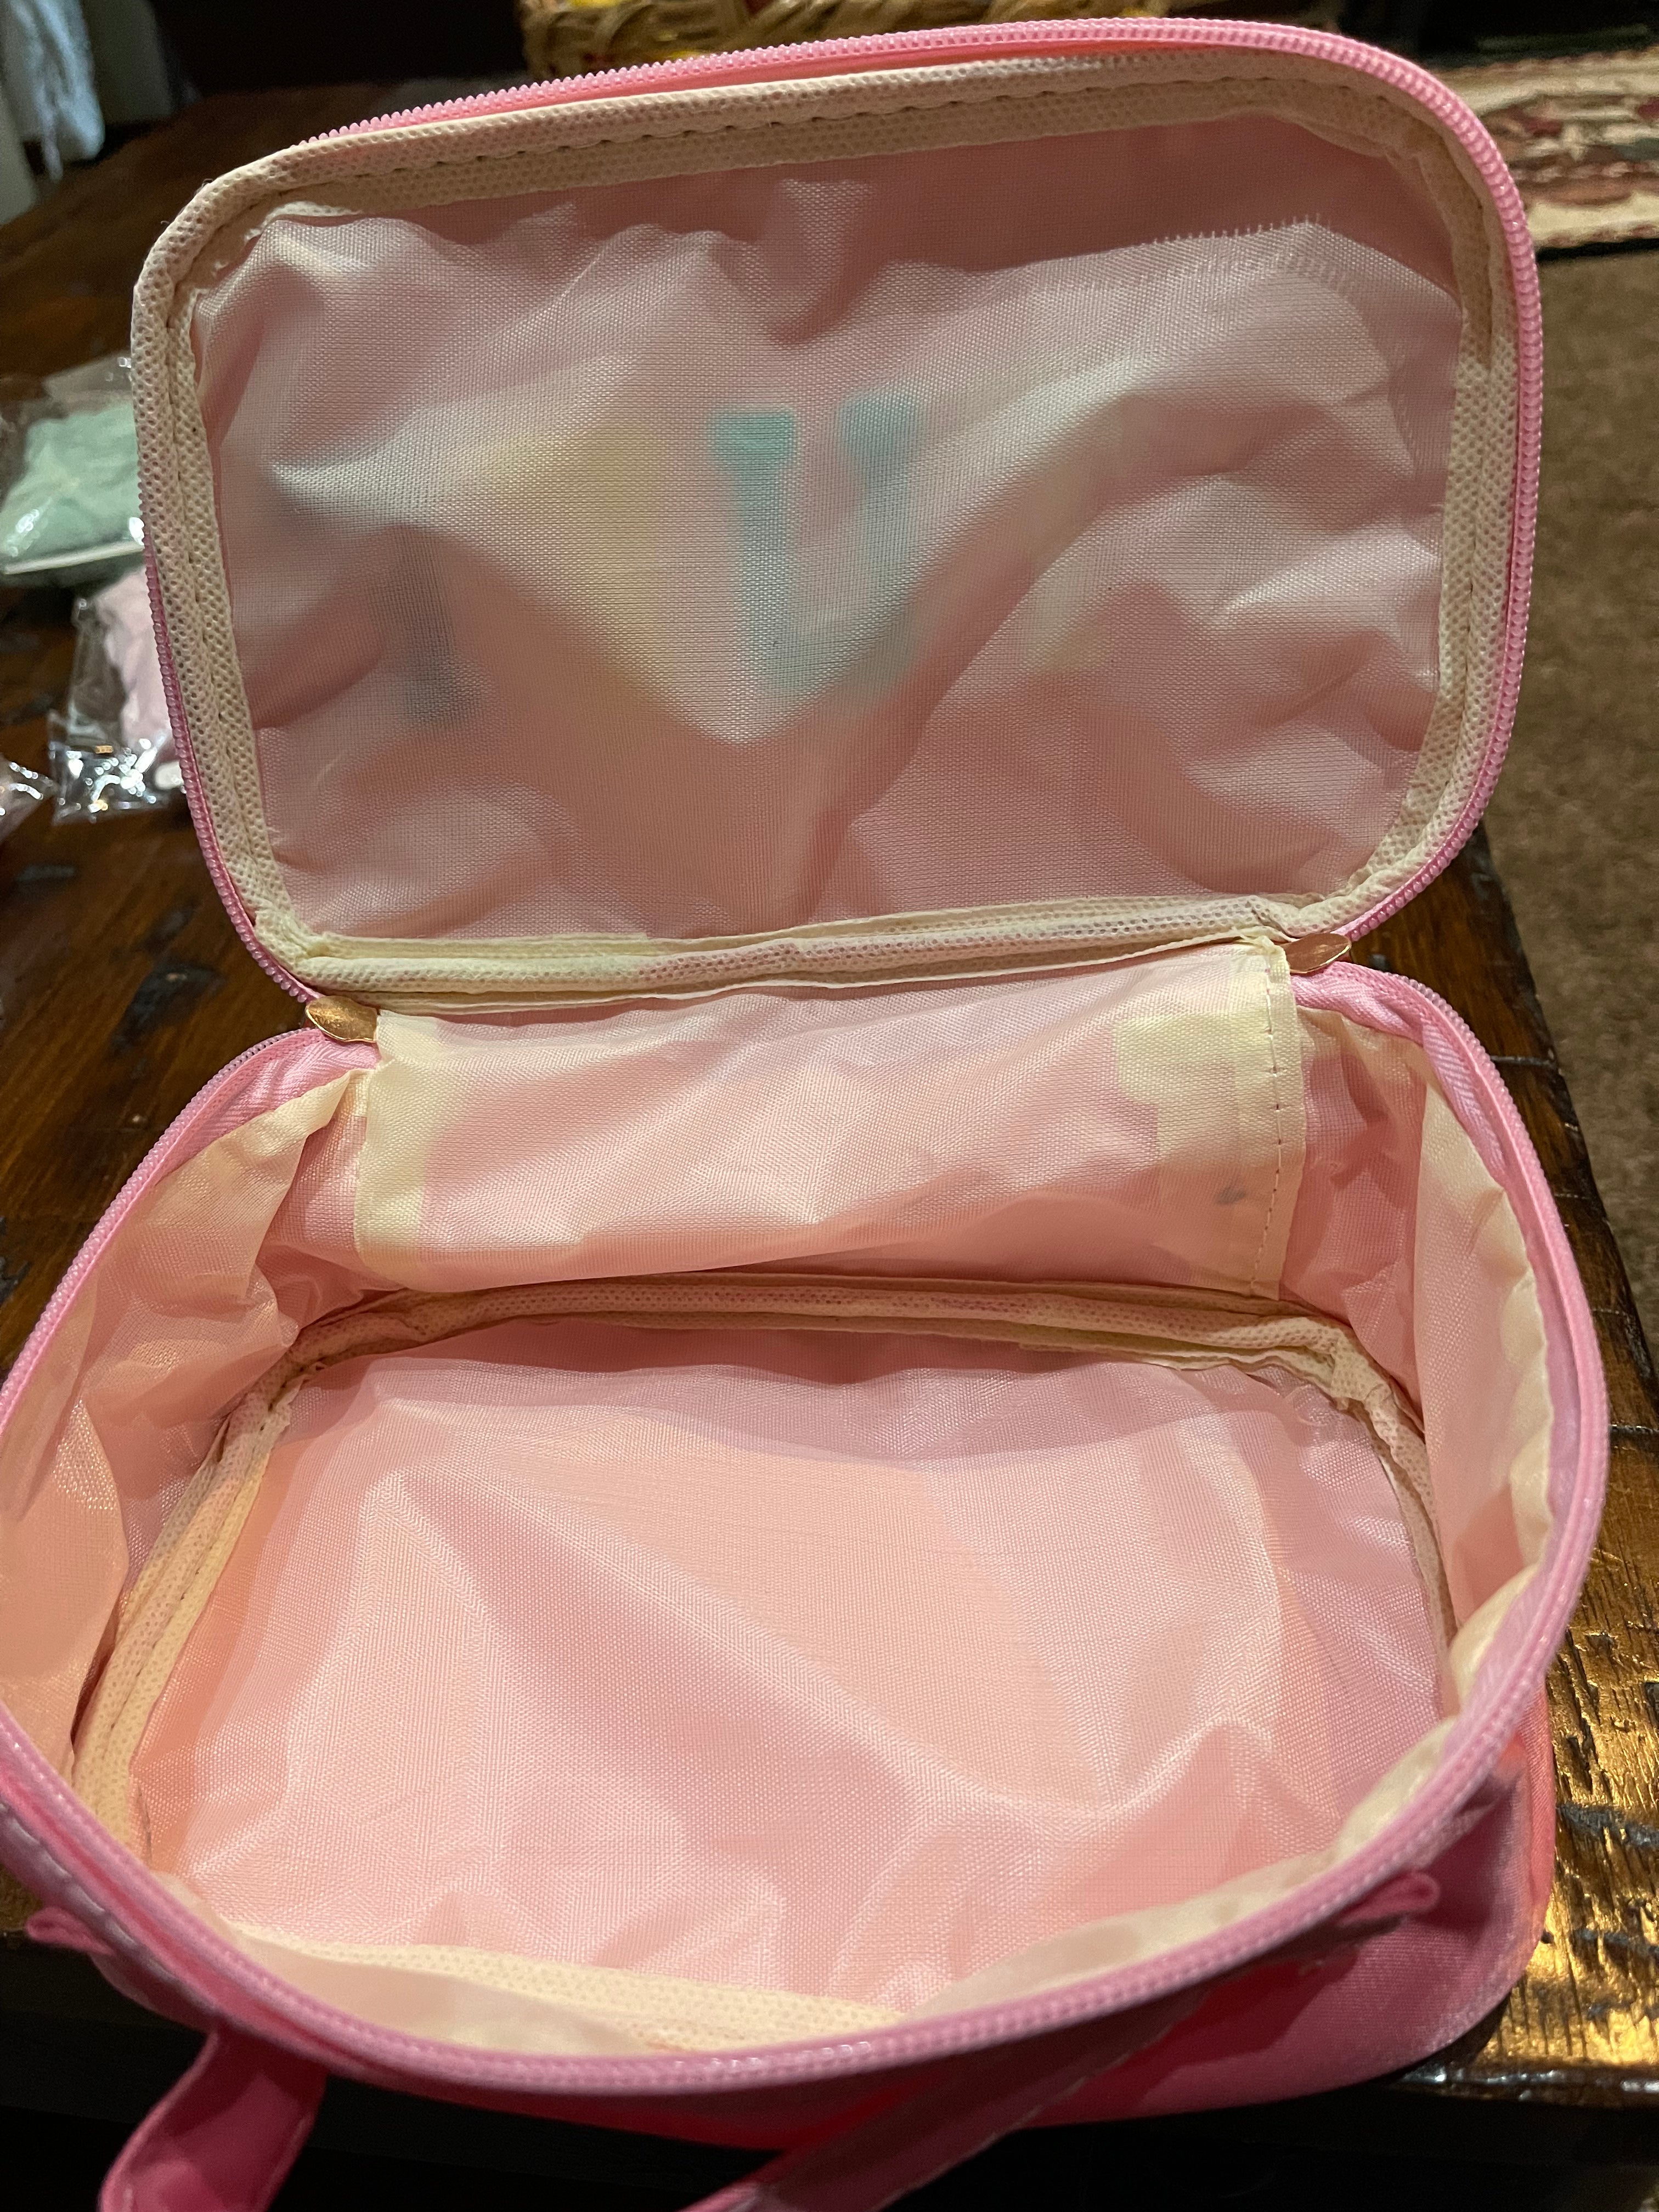 Pink stuff bag